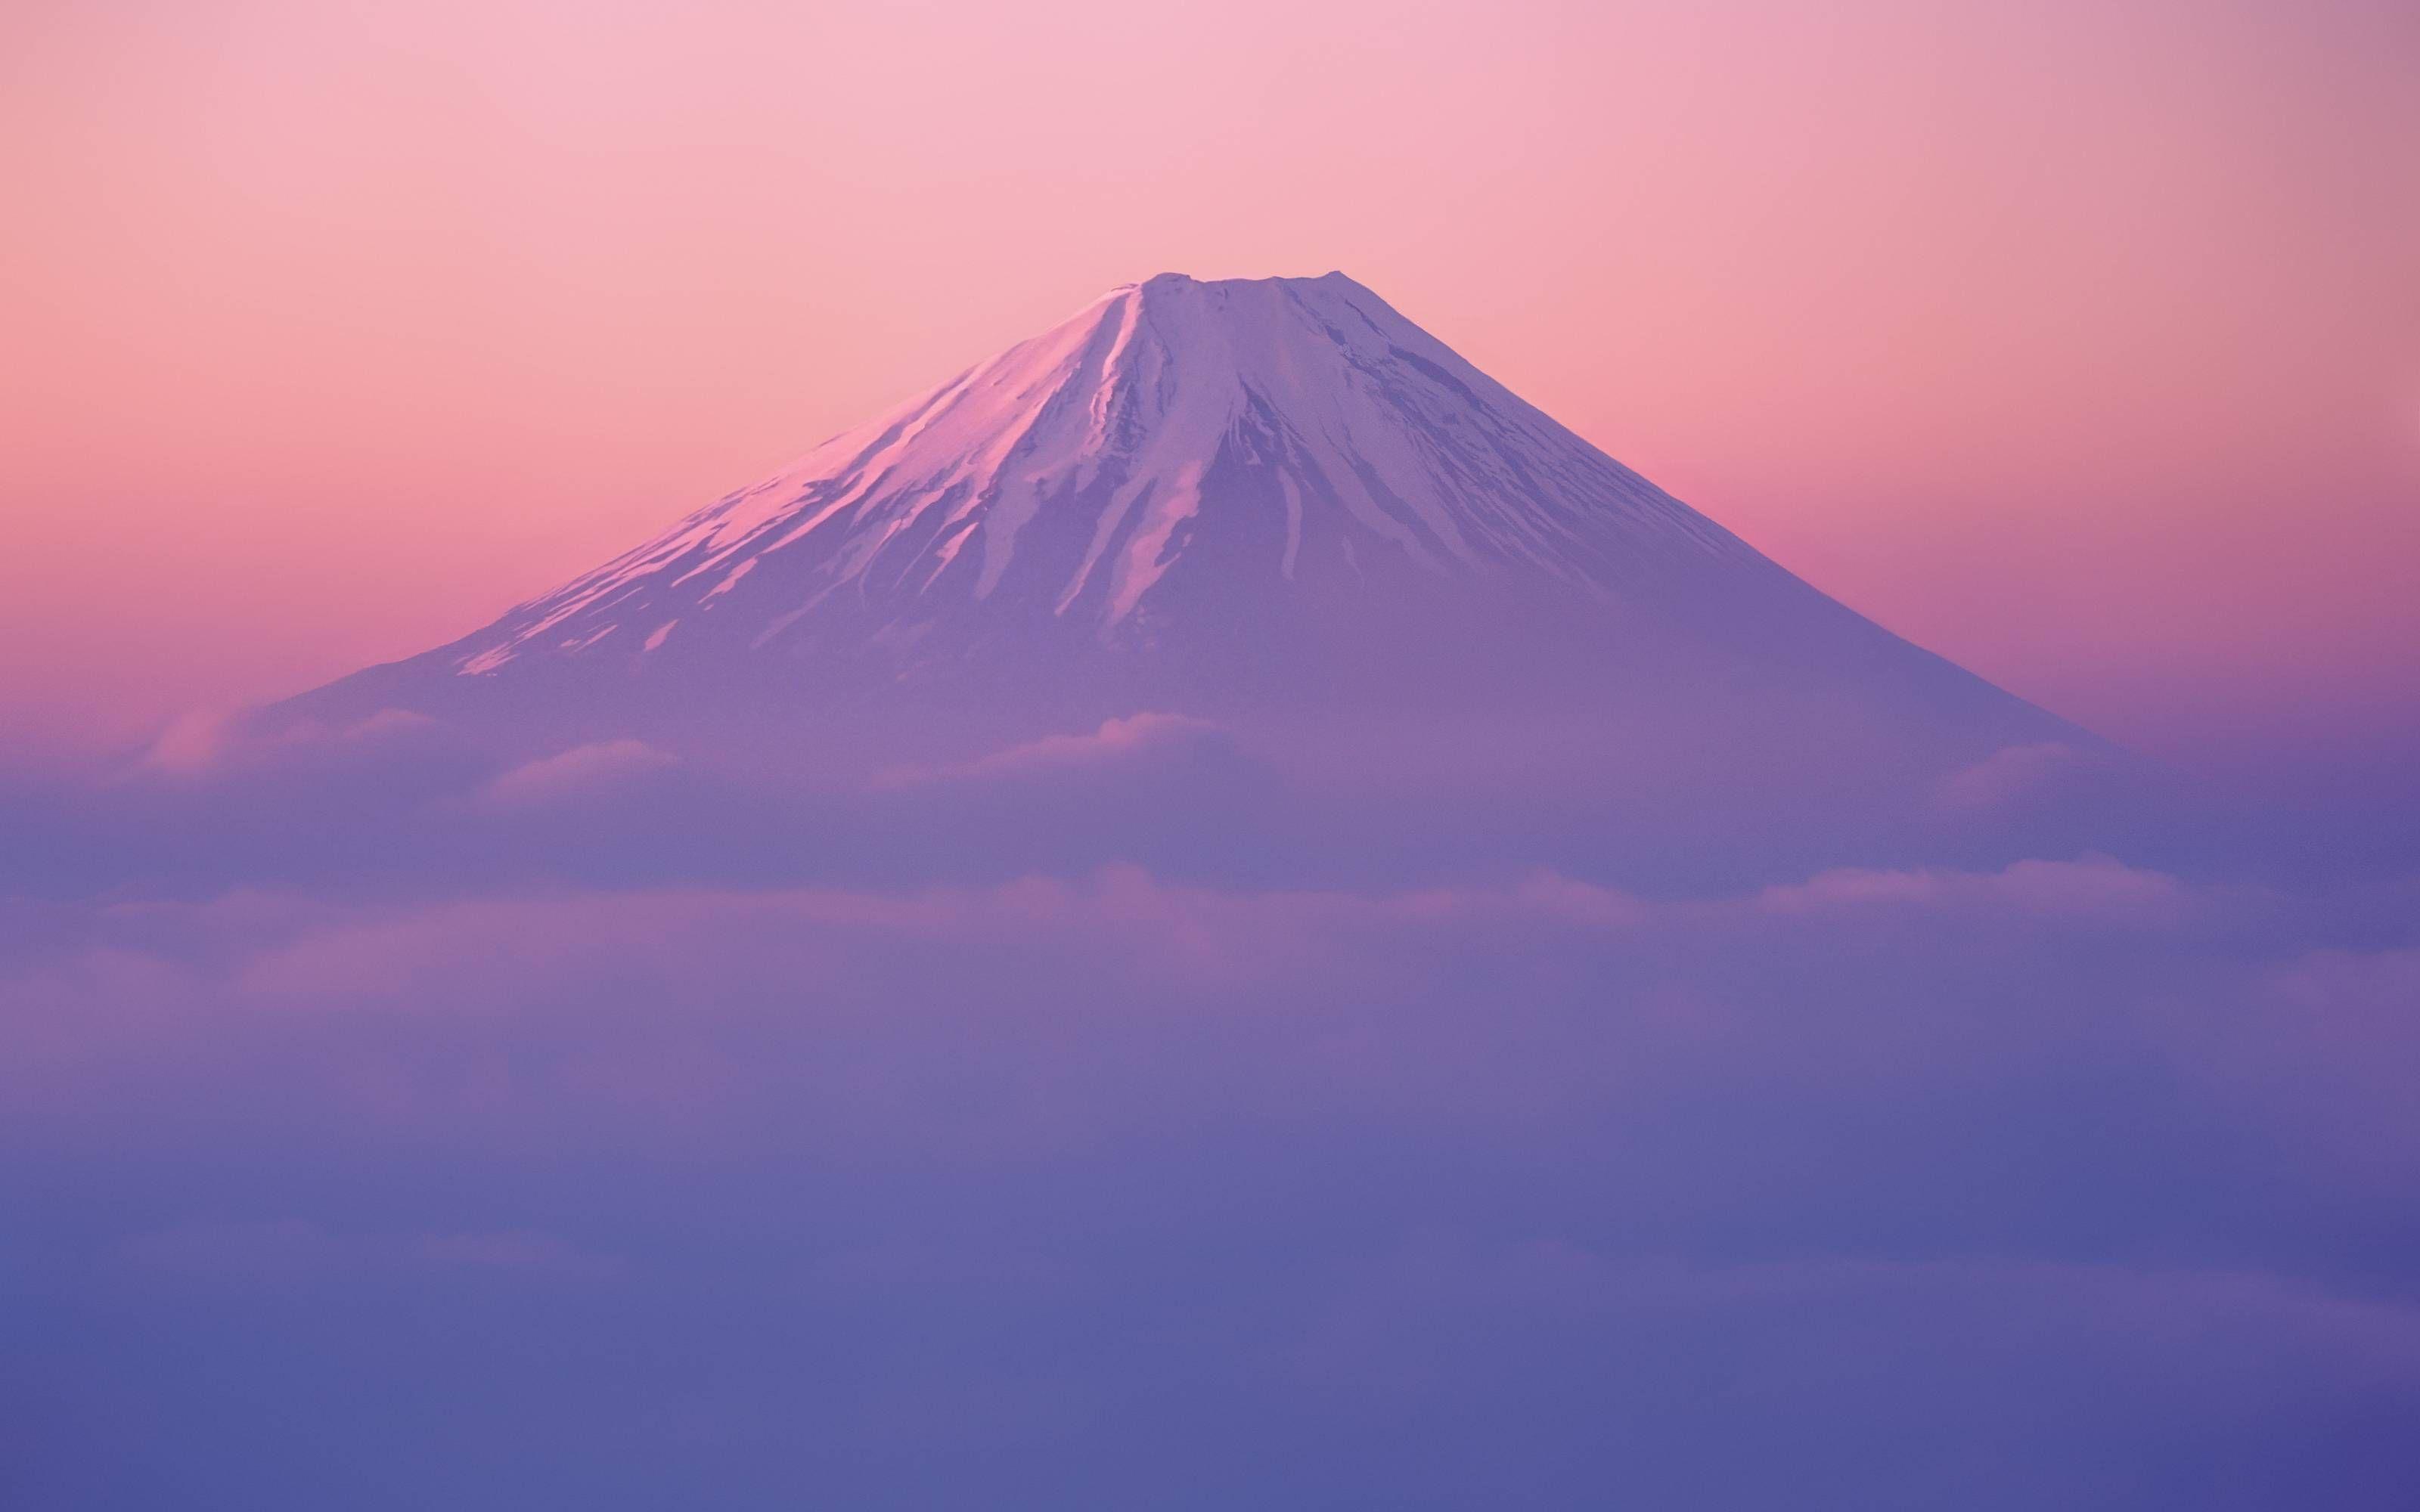 New Mt Fuji Wallpaper In Mac OS X Lion Developer Preview 2. Coral